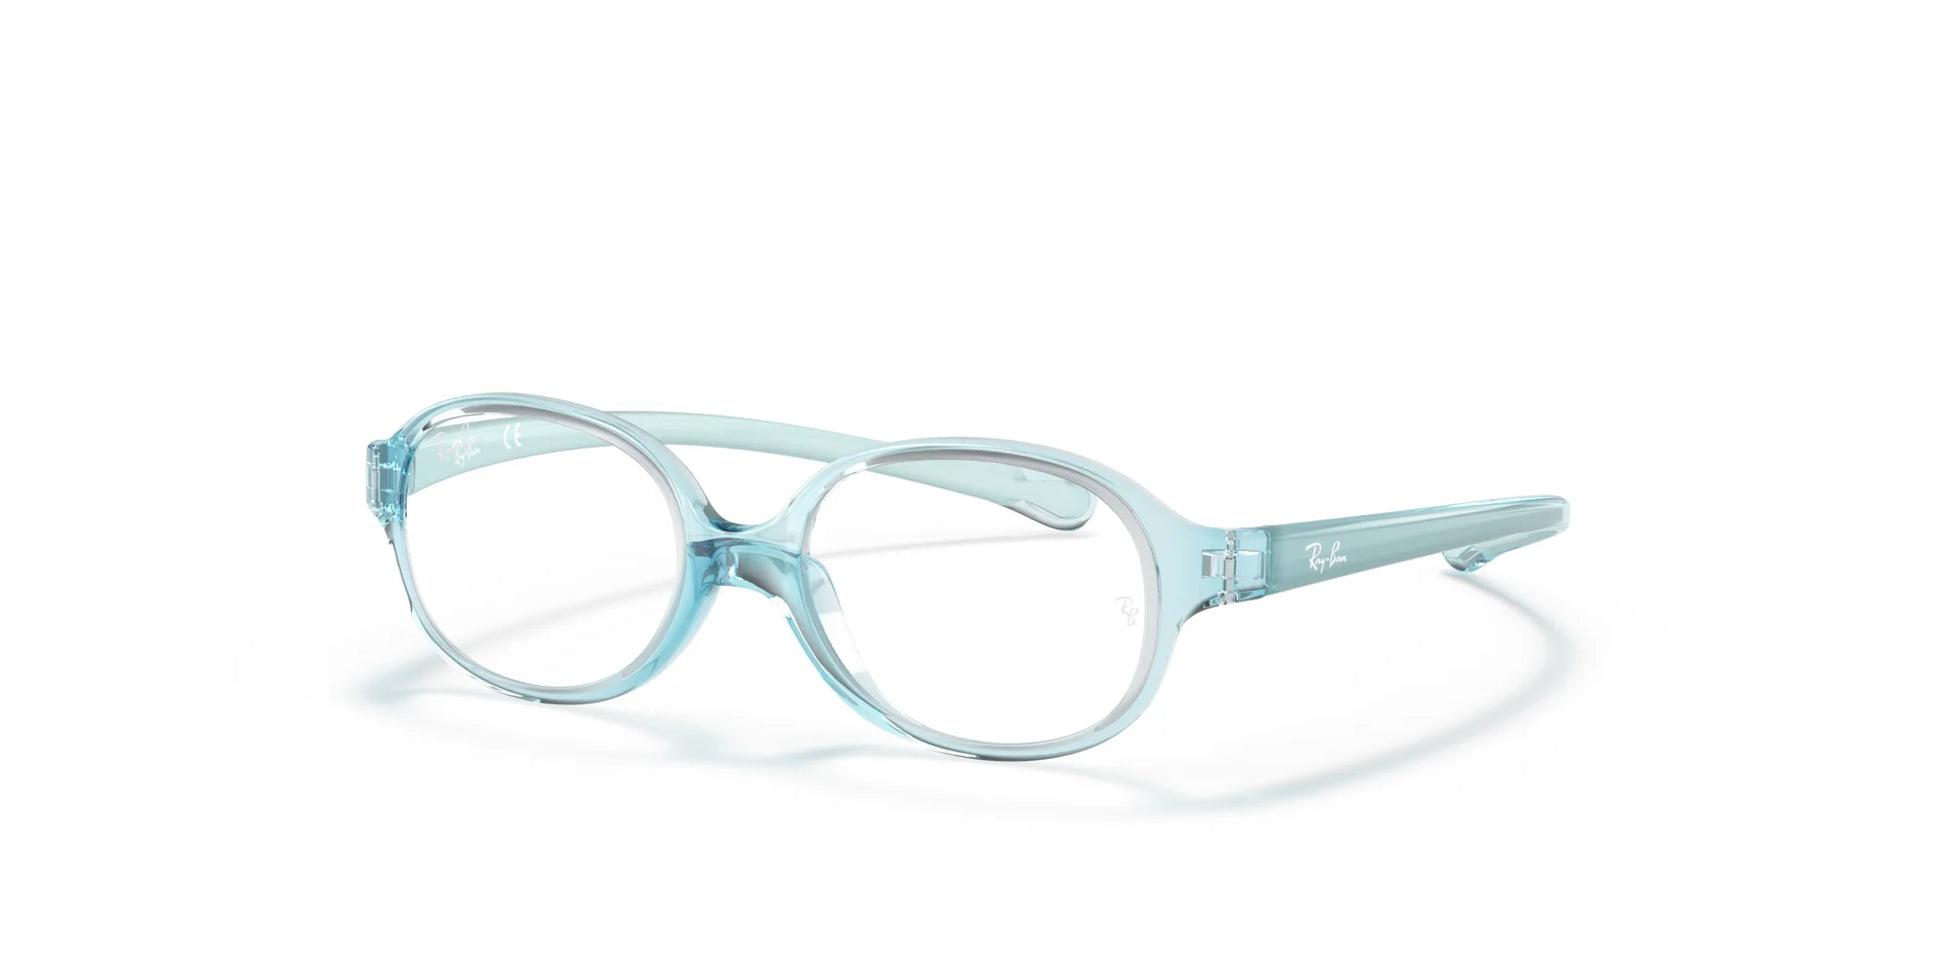 Ray-Ban RY1587 Eyeglasses Transparent Light Blue / Clear